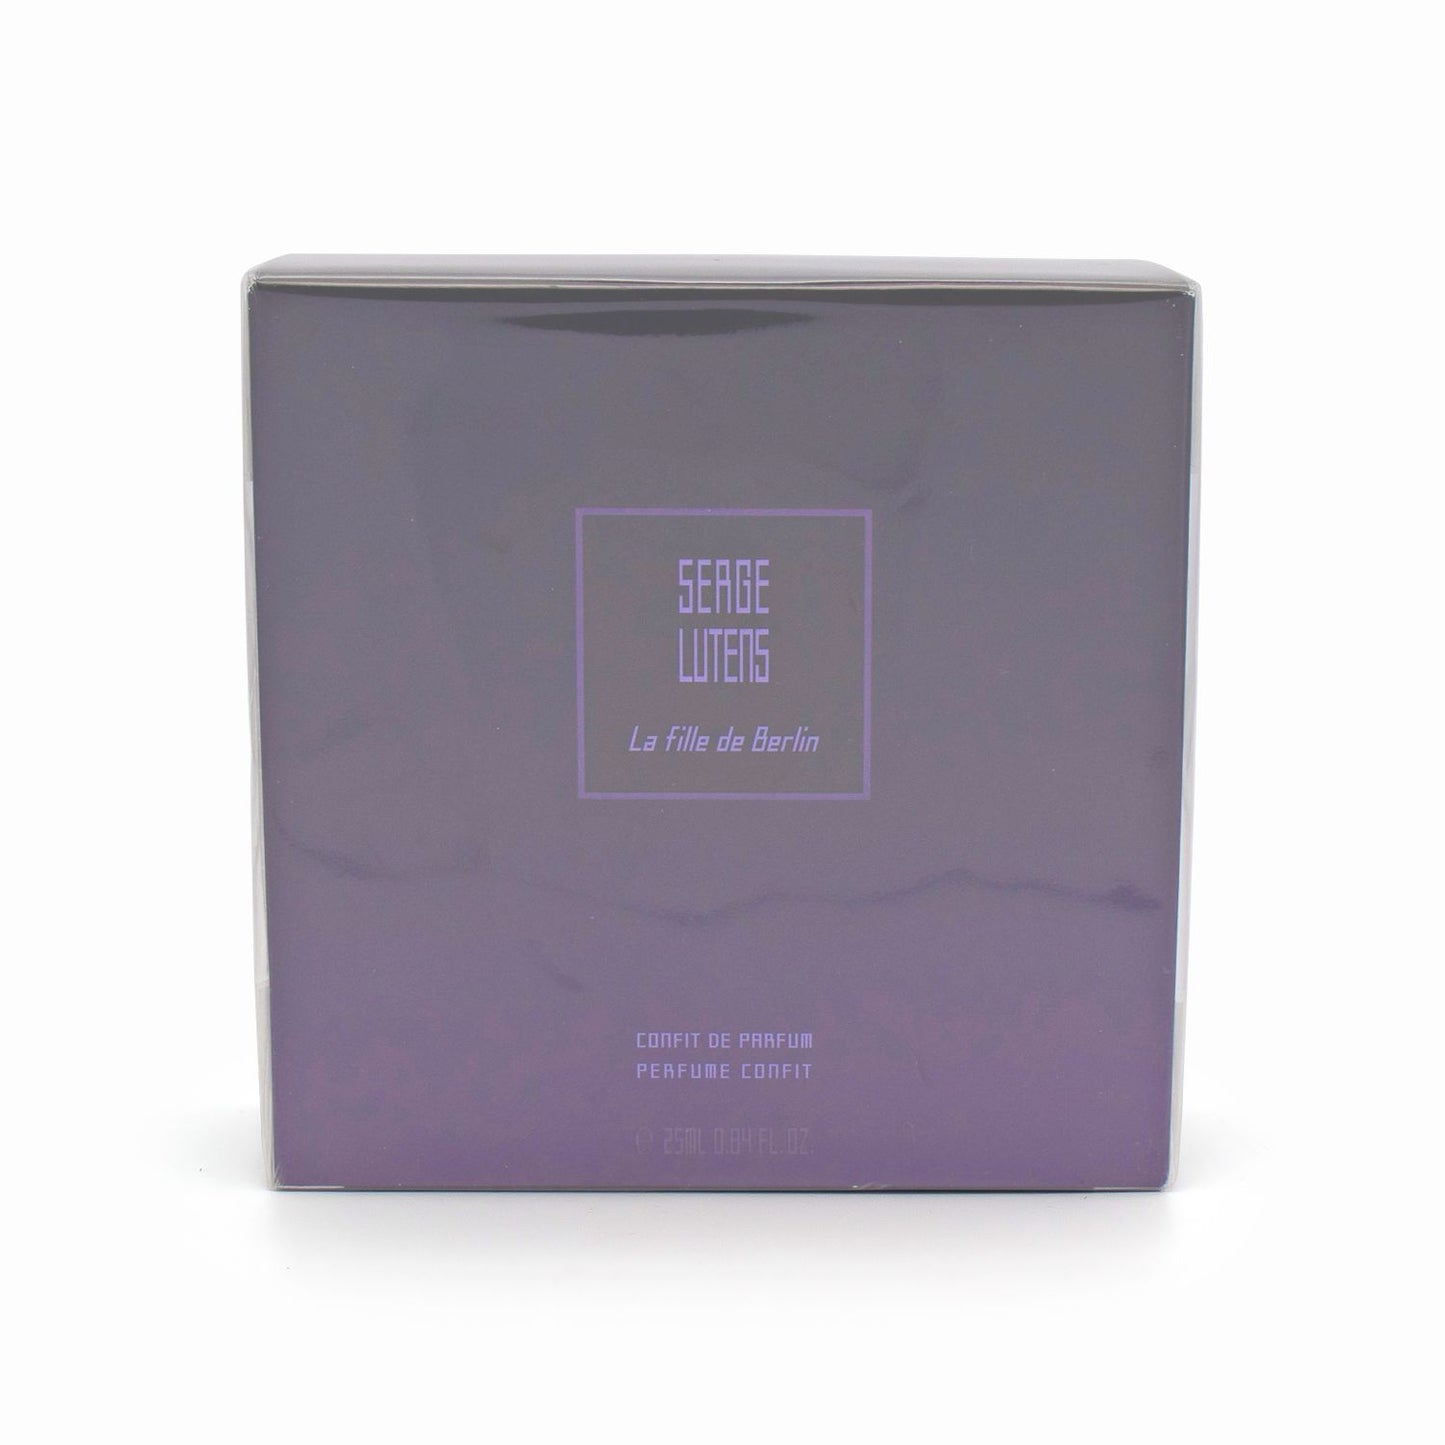 Serge Lutens La Fille De Berlin Perfume Confit 25ml - Imperfect Box